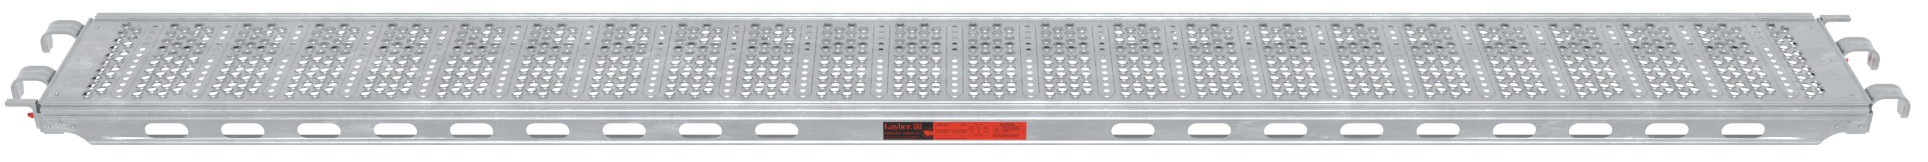 Layher Steel Deck LW